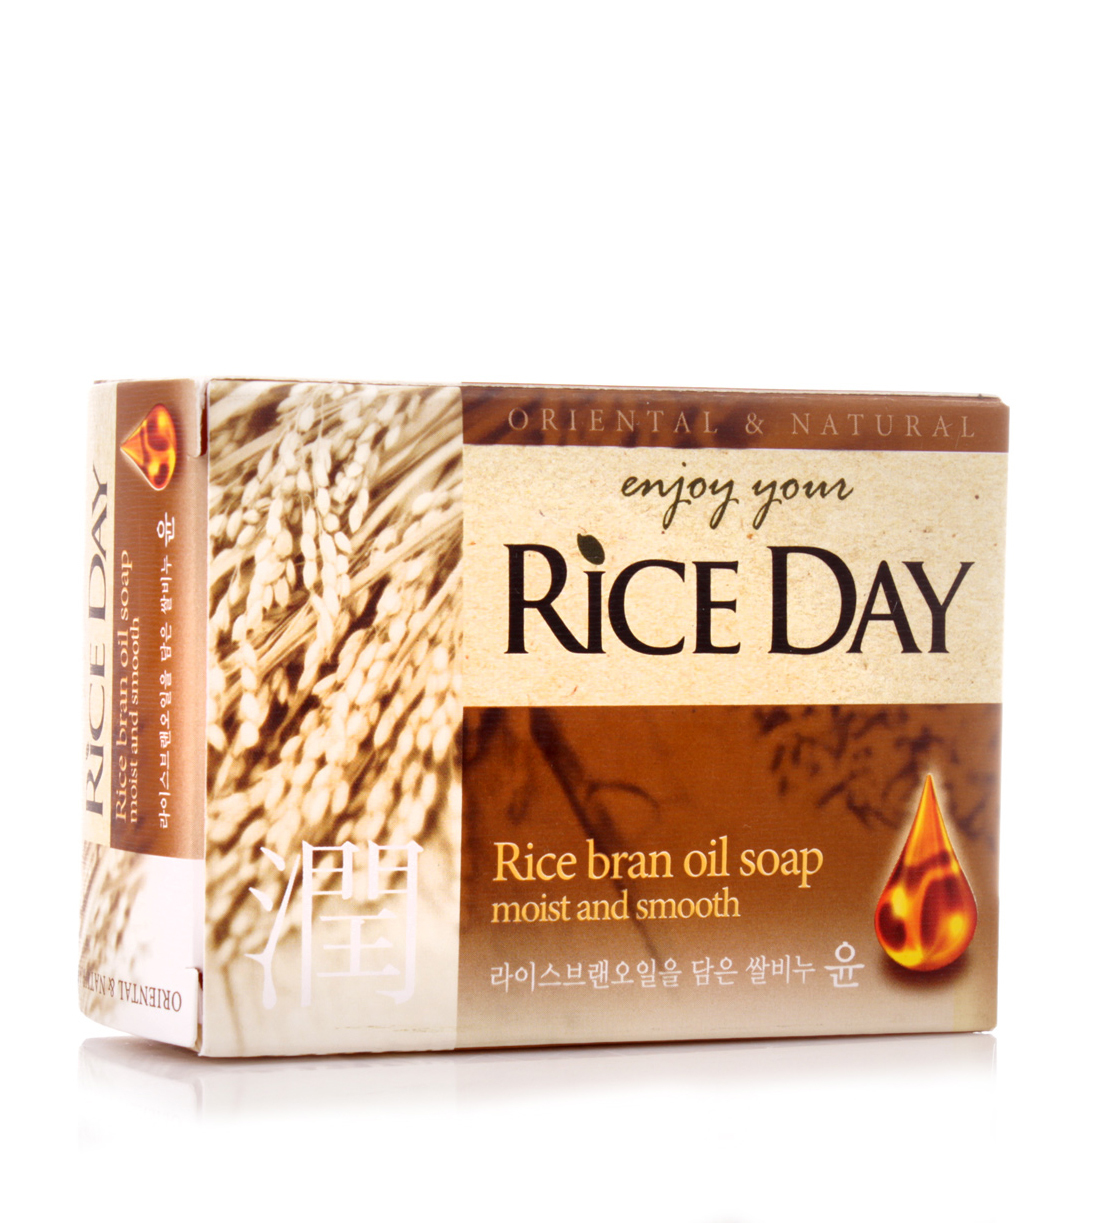 Rice day. Lion Rice Day мыло туалетное. Lion туалетное мыло с рисовыми отрубями Rice Day 100 гр. Корея. Lion мыло туал. Rice Day экстракт рисовых отрубей , 100гр. Lion Rice Day мыло туалетное с экстрактом рисовых отрубей 100 гр.